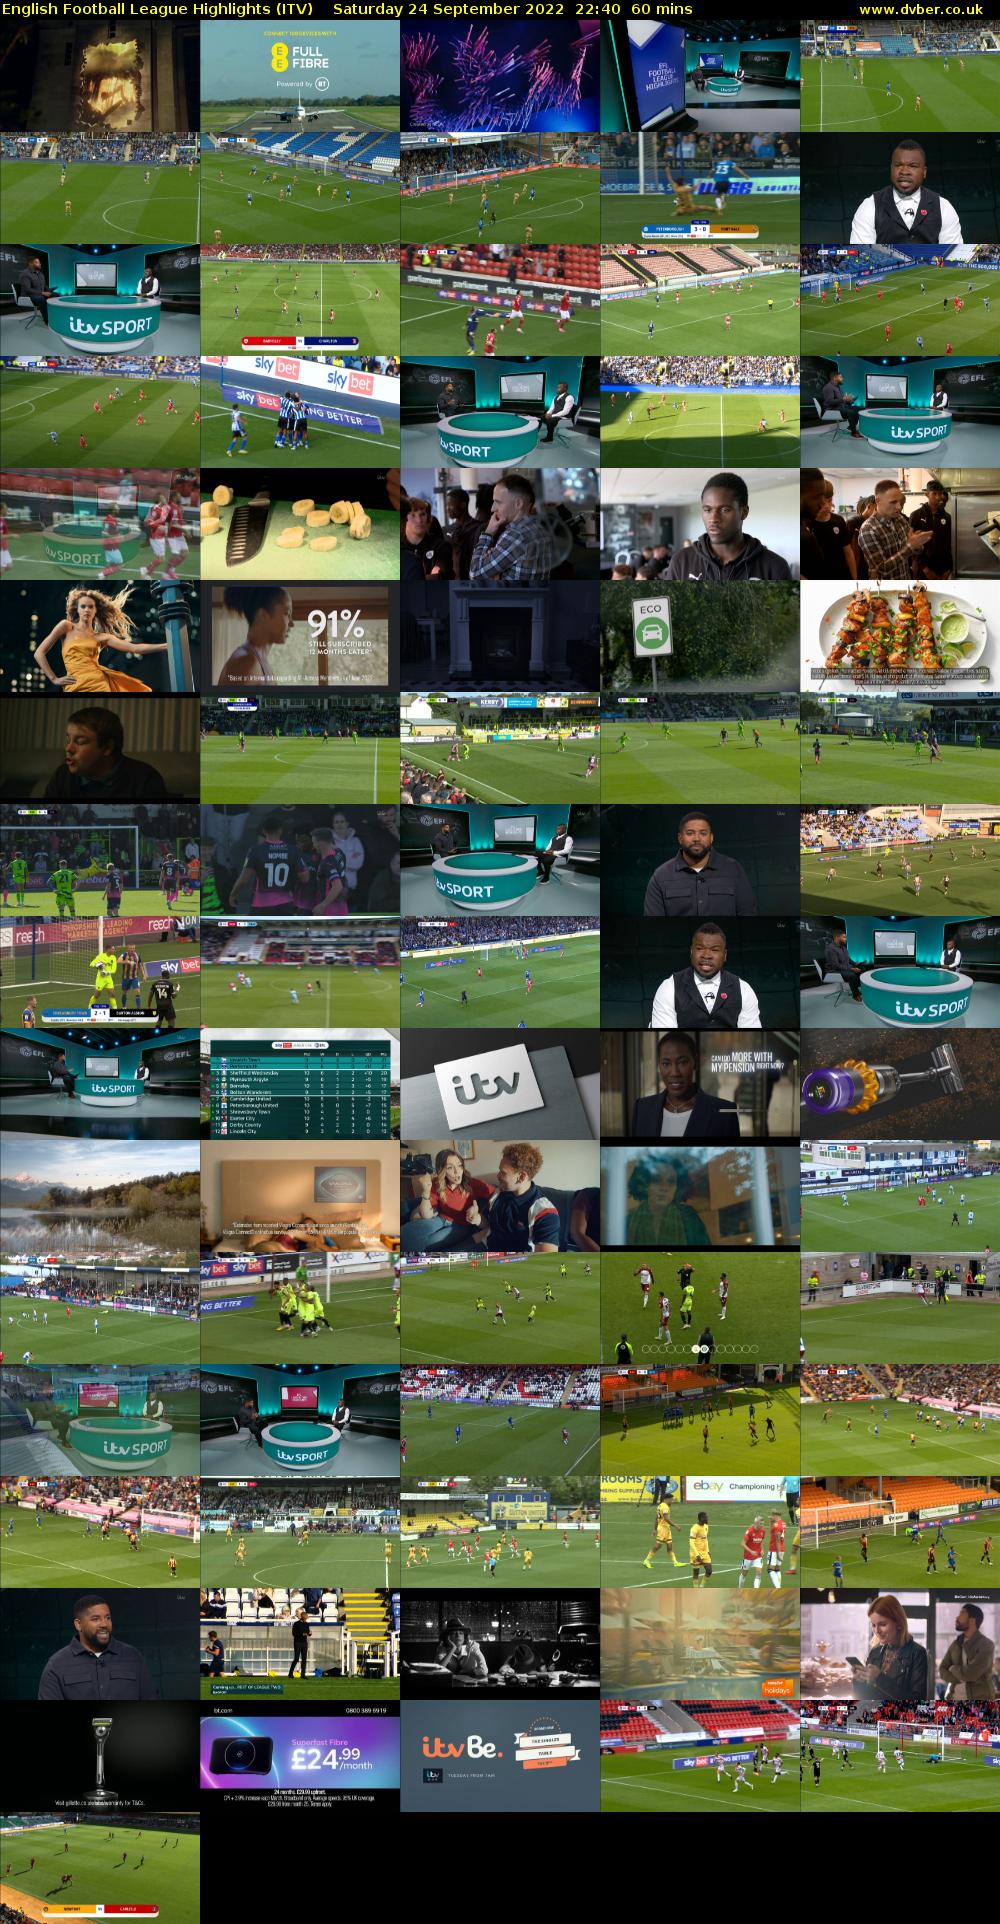 English Football League Highlights (ITV) Saturday 24 September 2022 22:40 - 23:40